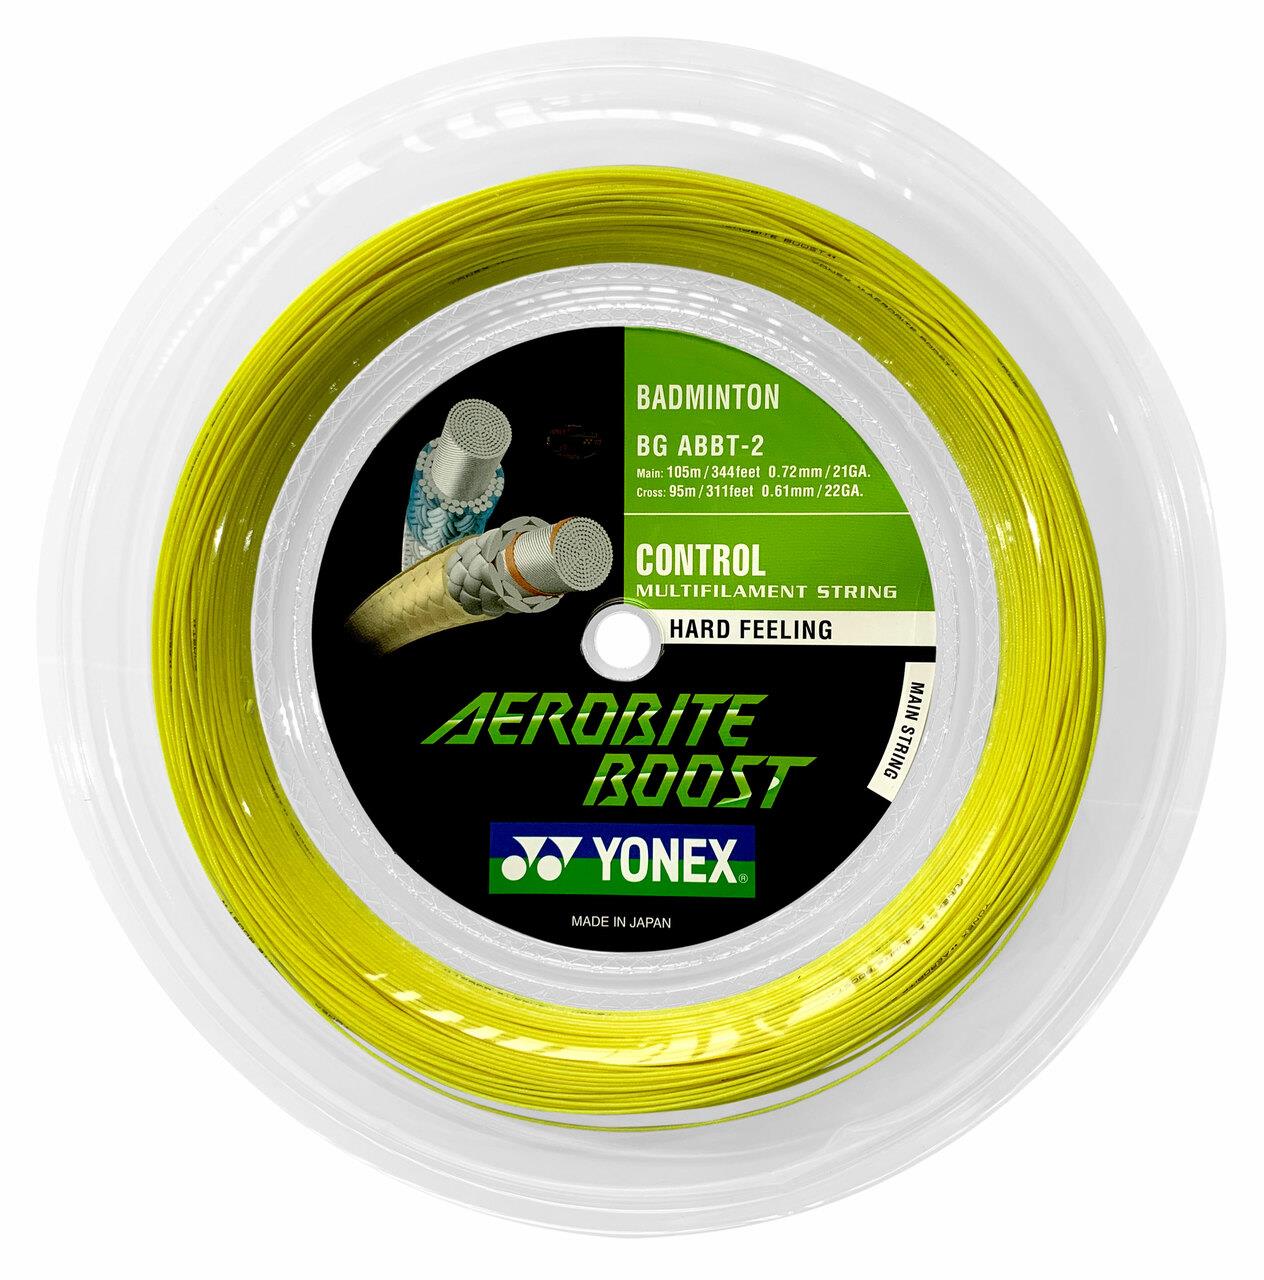 Yonex Aerobite Boost Badminton String Grey Yellow - 0.72/0.61mm 200M Reel